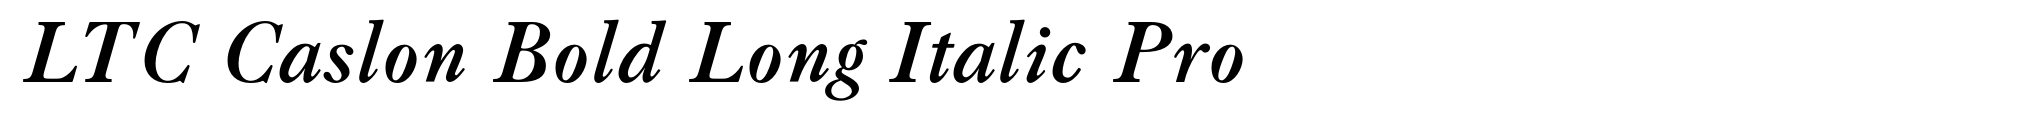 LTC Caslon Bold Long Italic Pro image